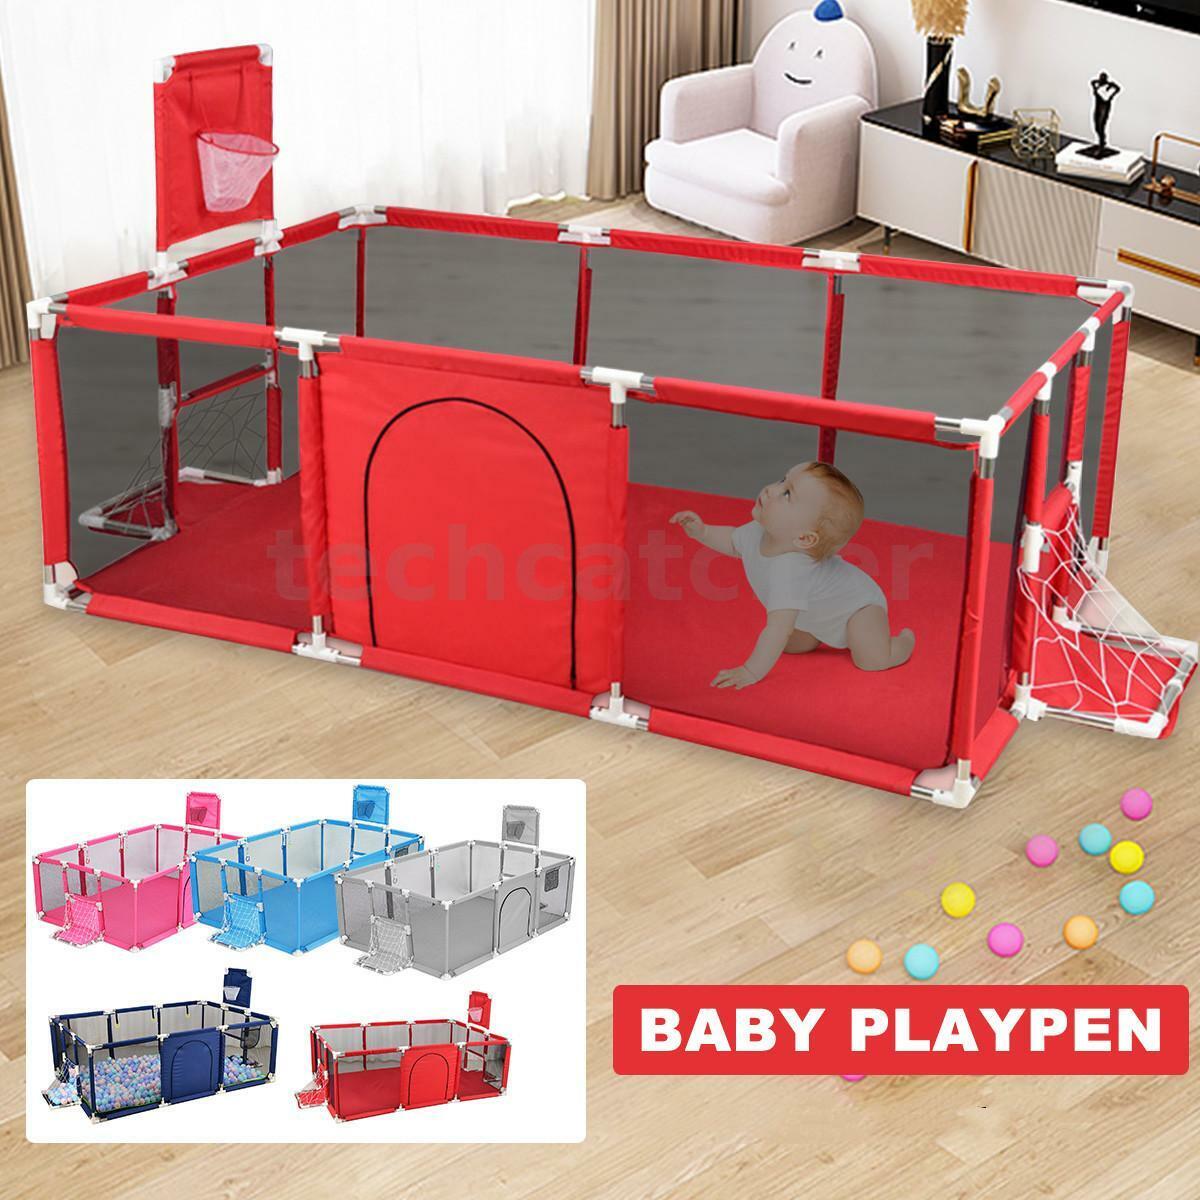 Baby Playpen Kids 12 Panel Safety Play Center Yard Home Indoor Outdoor Pen